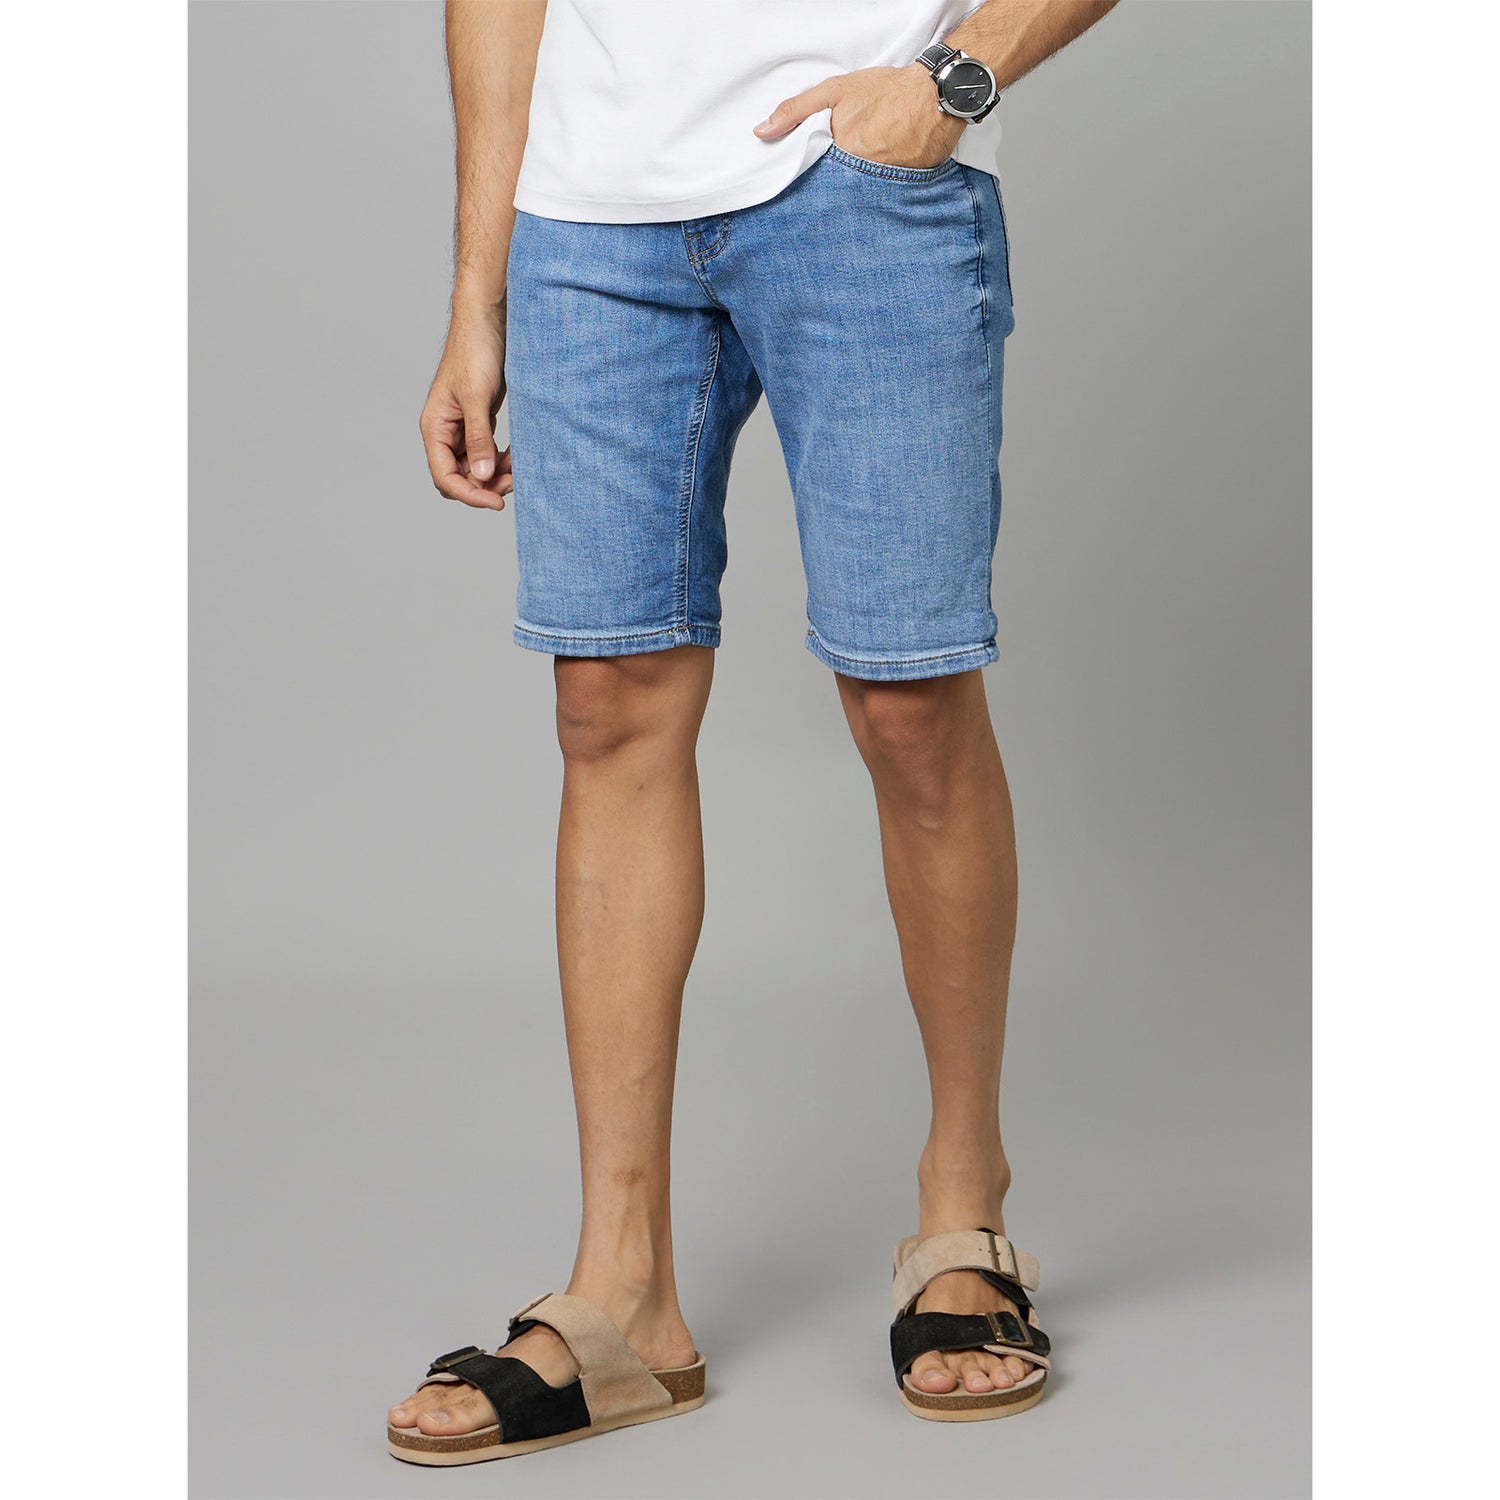 Blue Mid-Rise Regular Fit Cotton Denim Shorts (DOKNITBM)